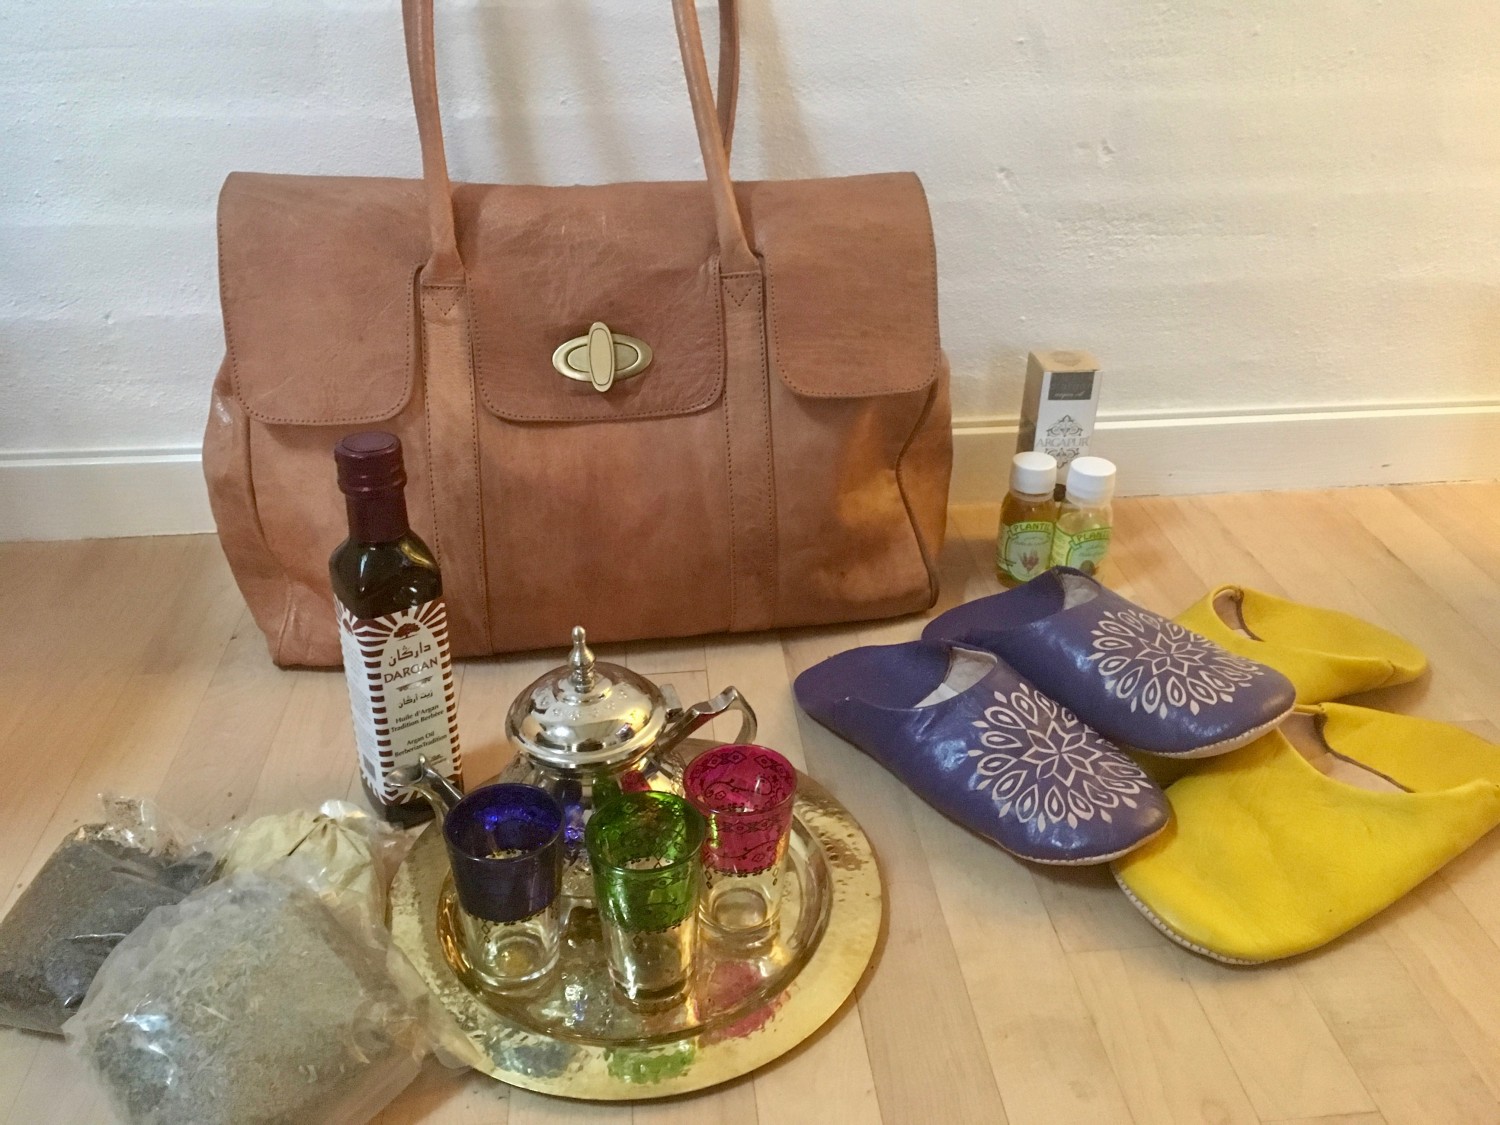 shoppeguide-guide-til-marrakech-marokko-souk-indkøb-shopping-medina-krejler-souken